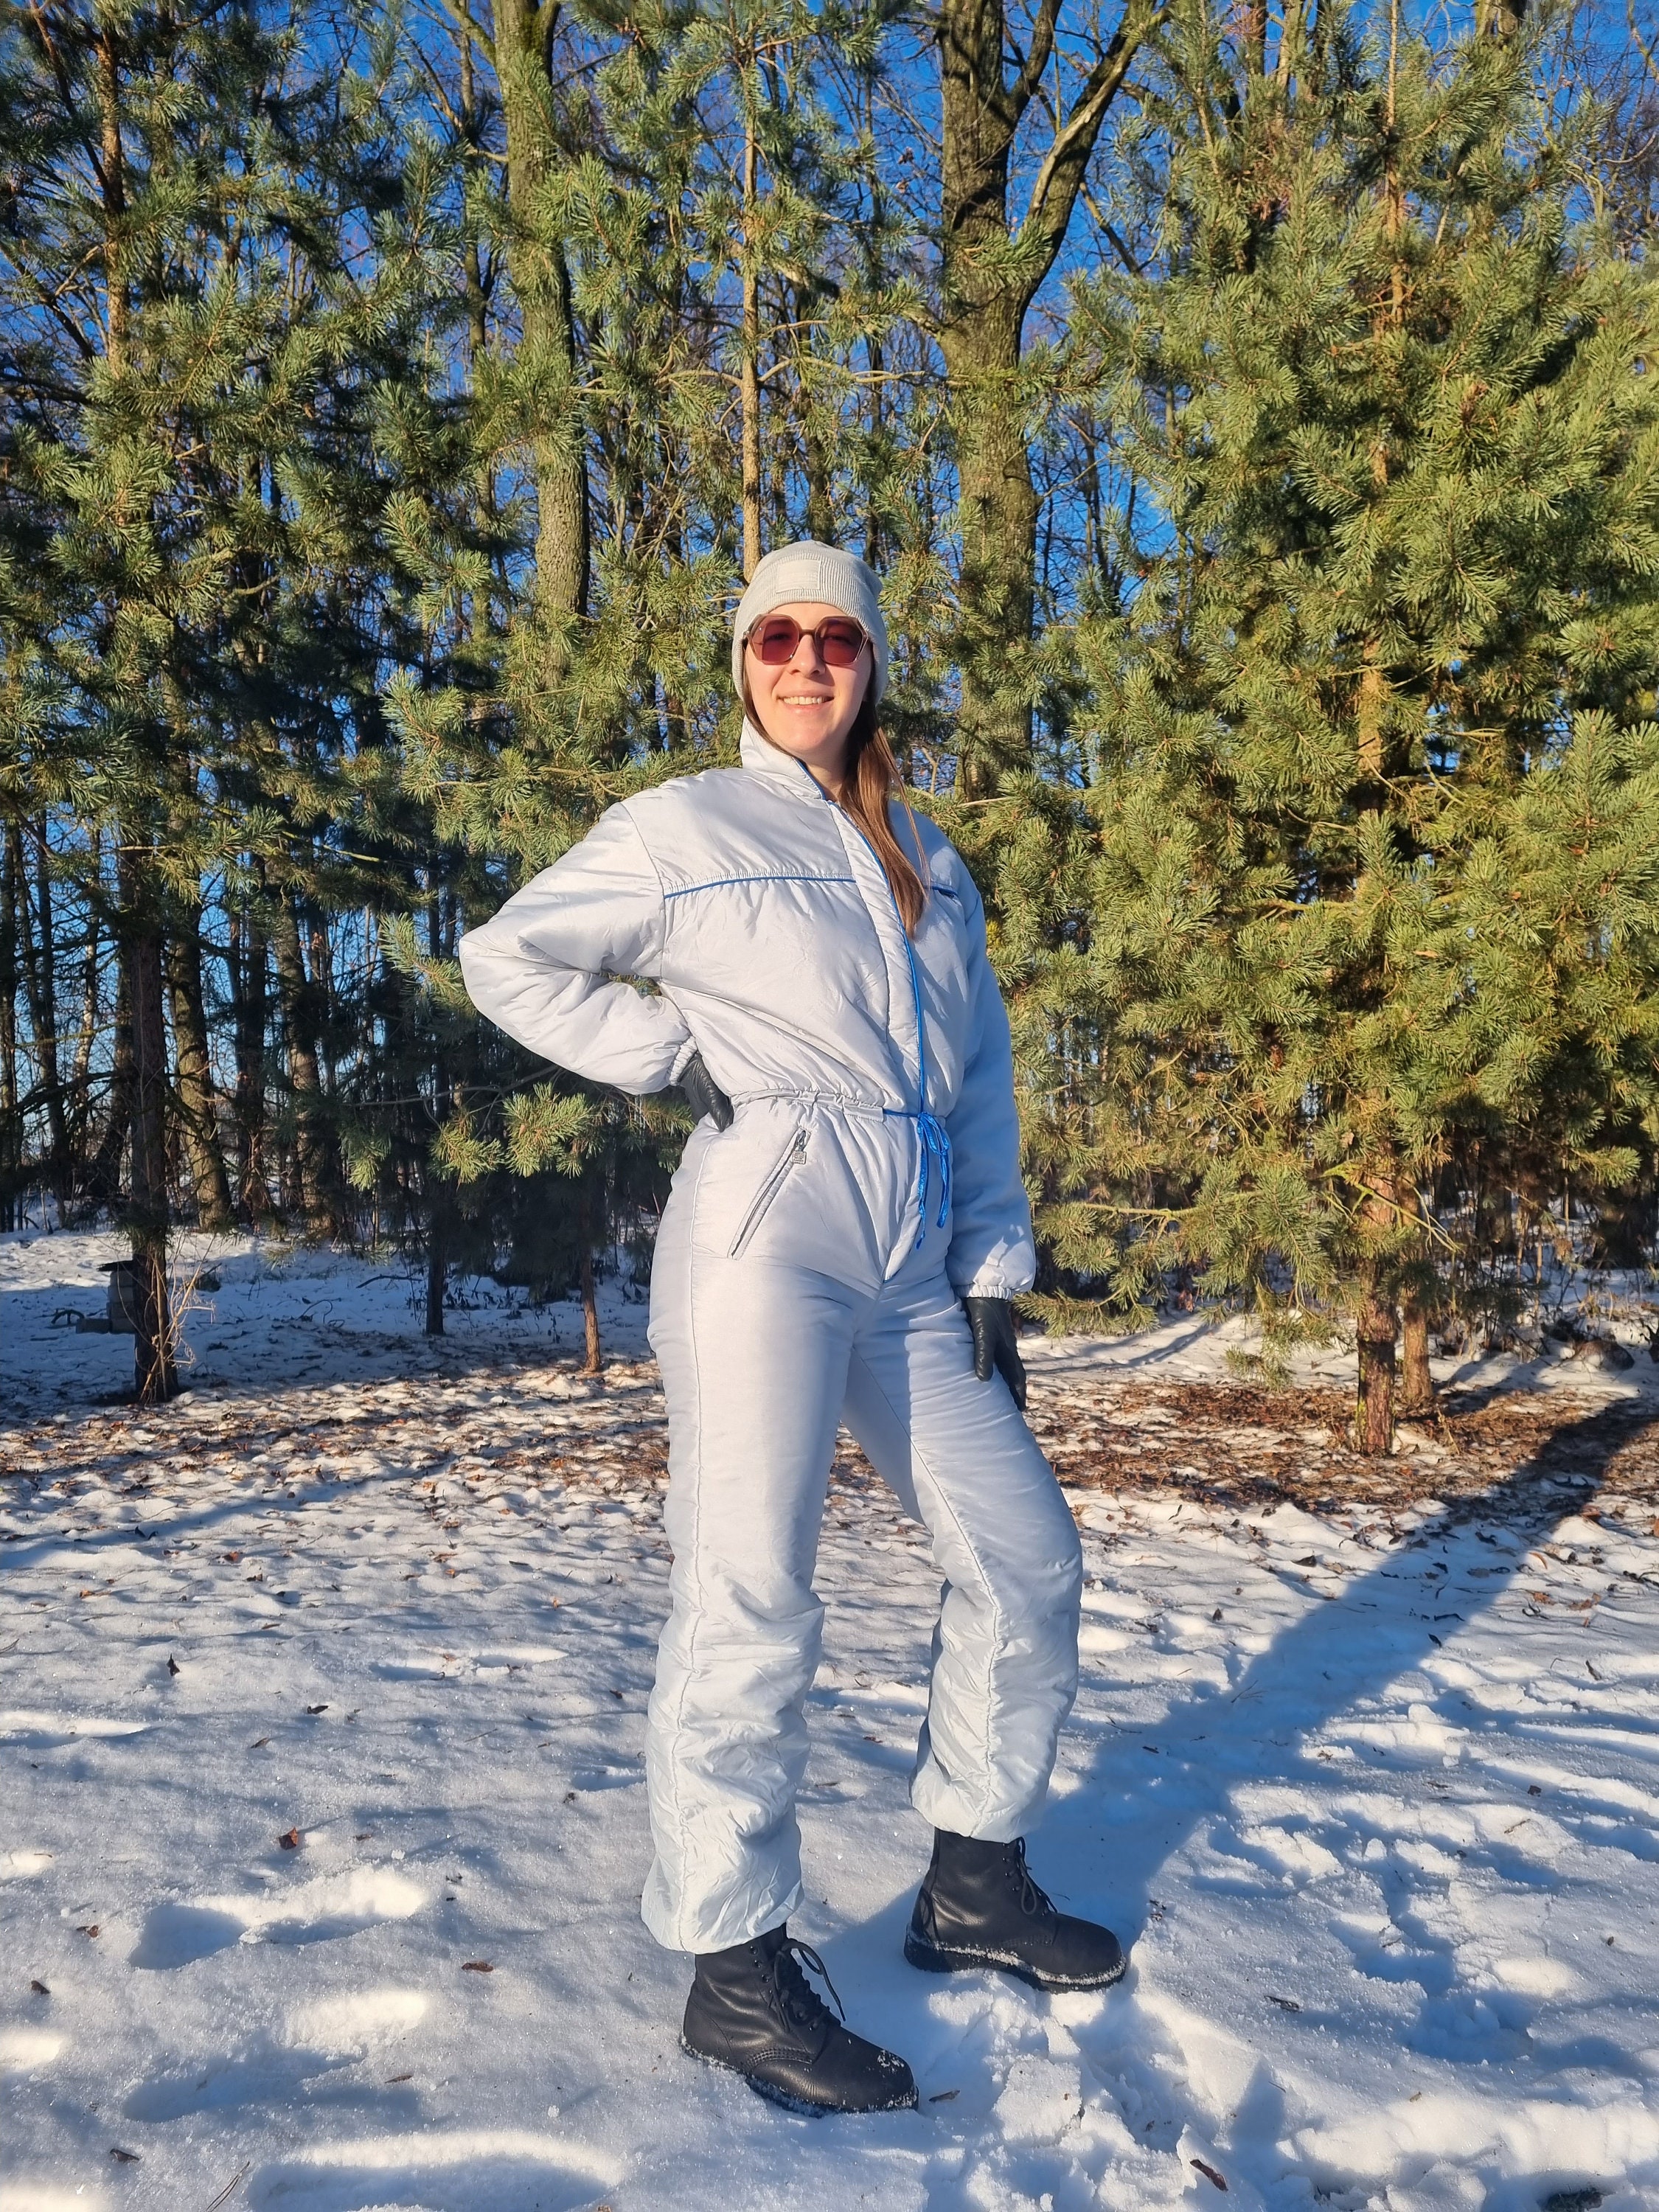 80's Ski Outfits: Vintage Men's & Women's Retro Ski Suits